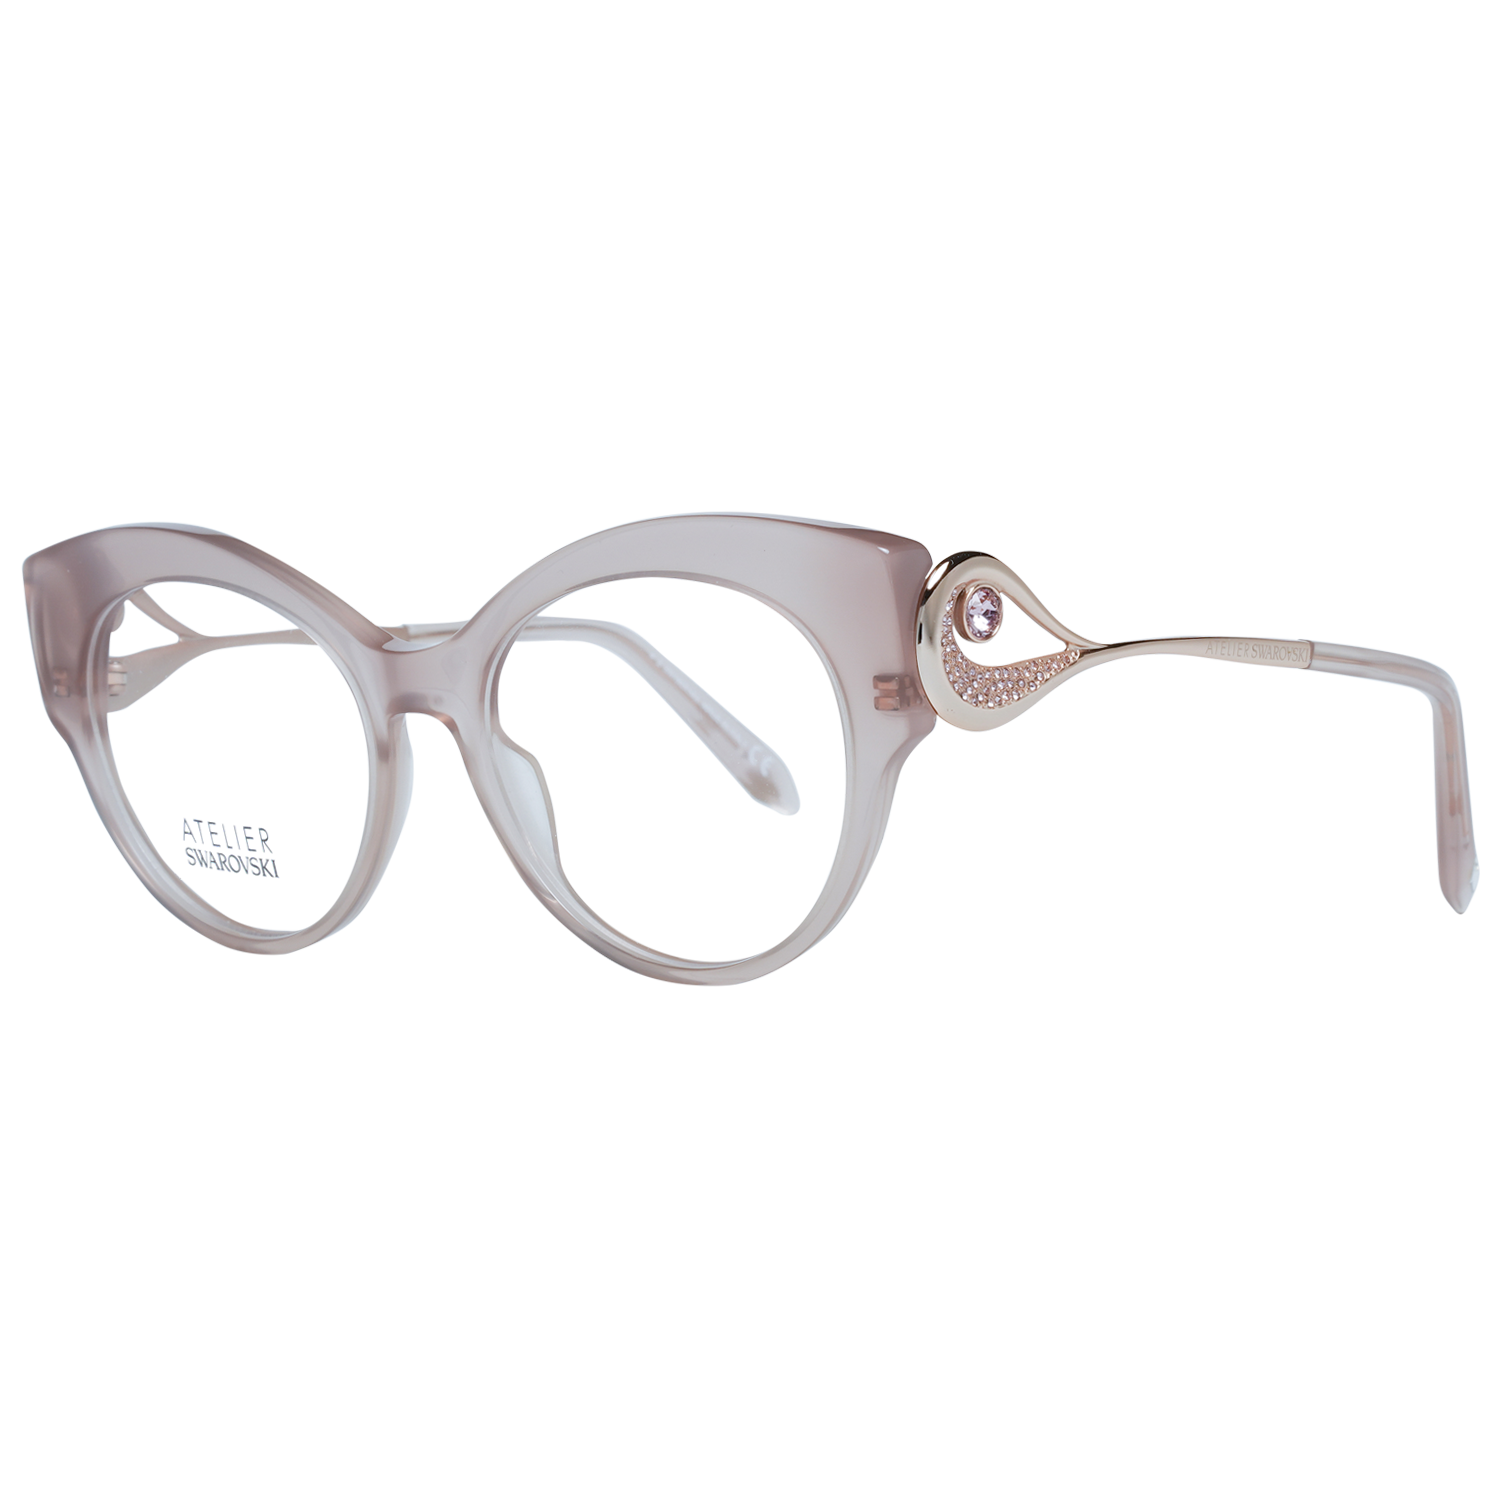 Atelier Swarovski Frames Atelier Swarovski Glasses Optical Frame SK5358-P 52 057 Eyeglasses Eyewear UK USA Australia 